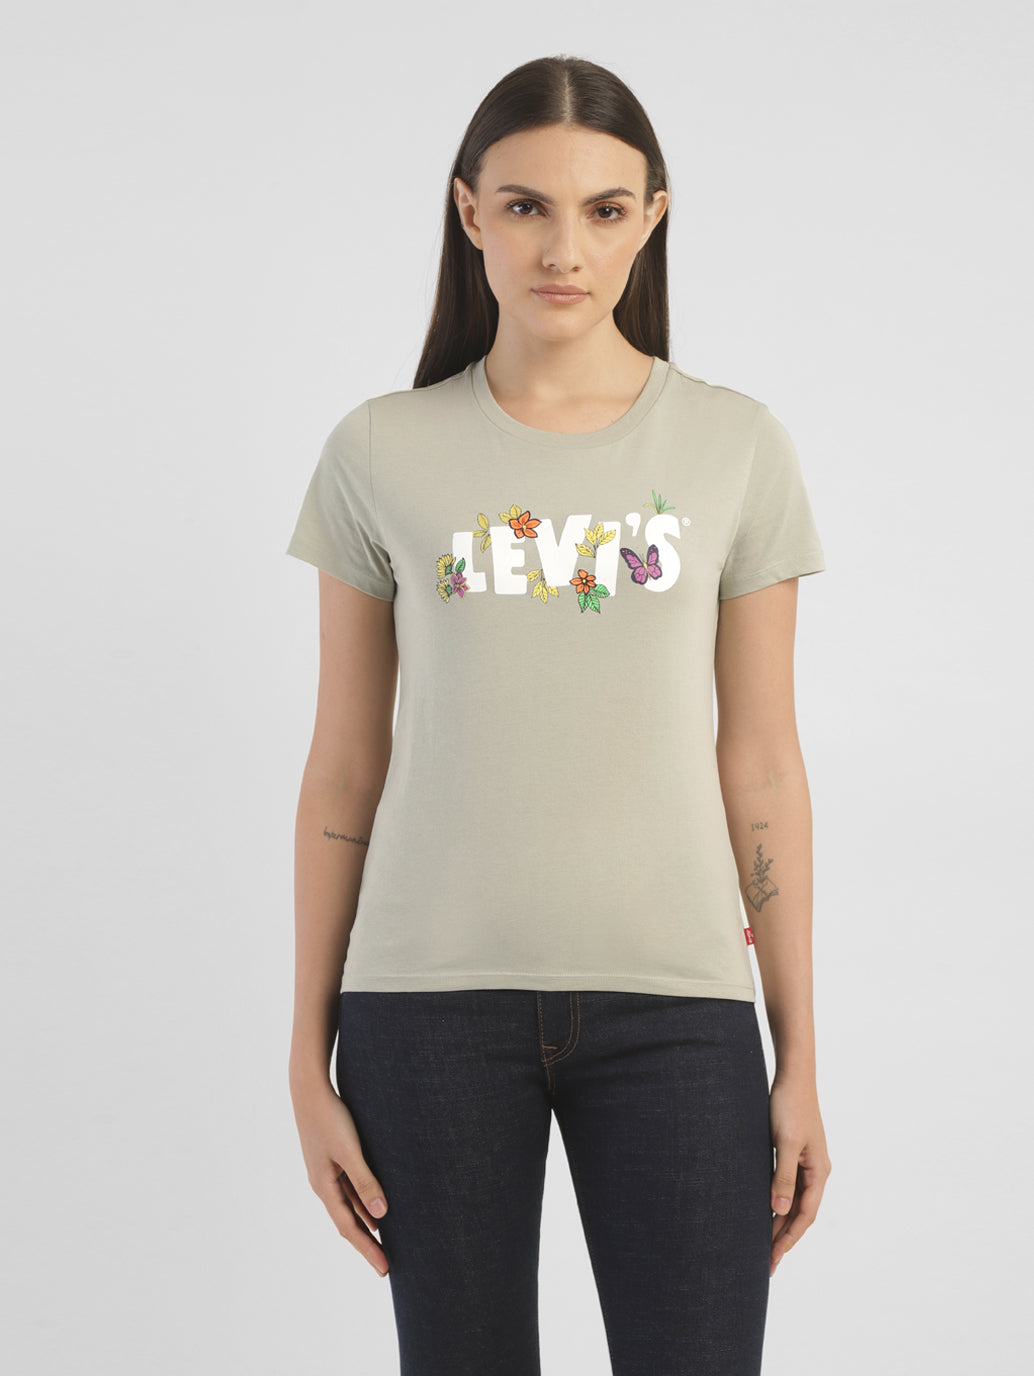 Women's Graphic Print Crew Neck T shirt